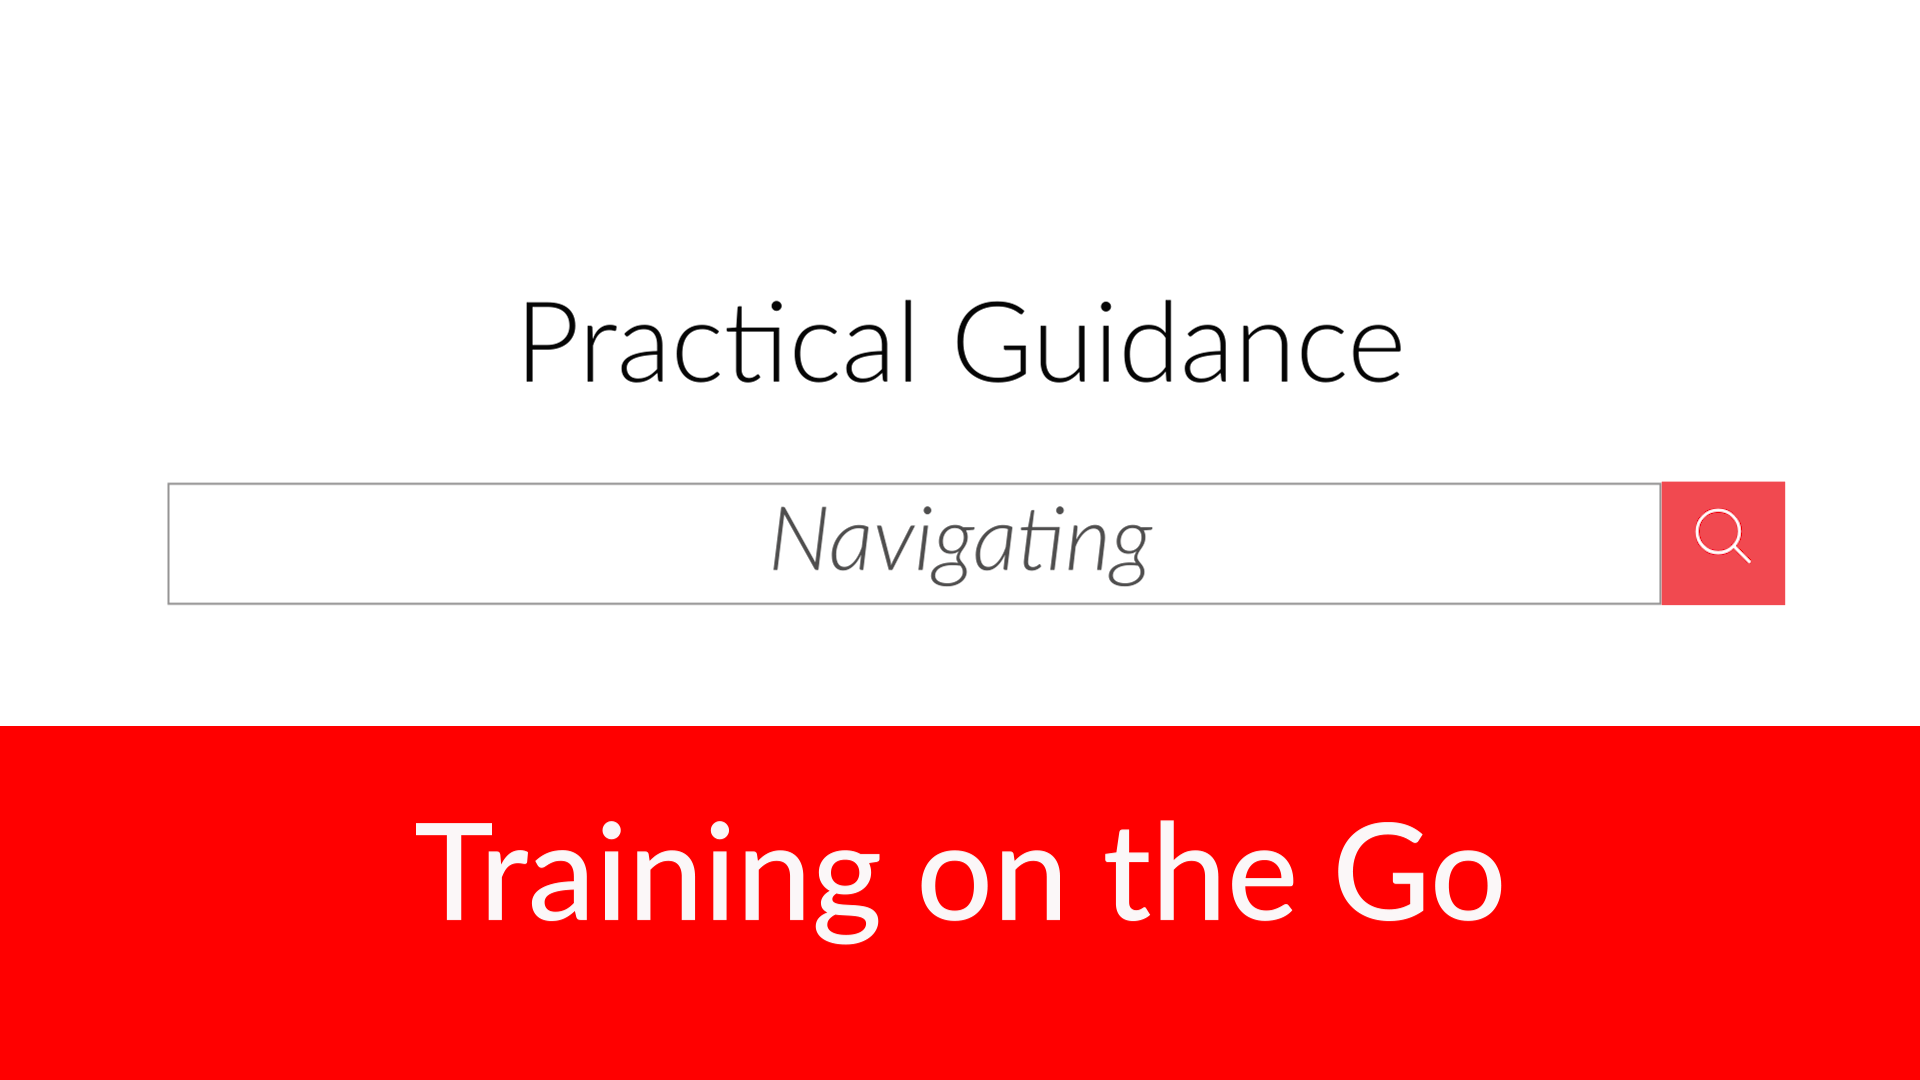 Practical Guidance: Navigating